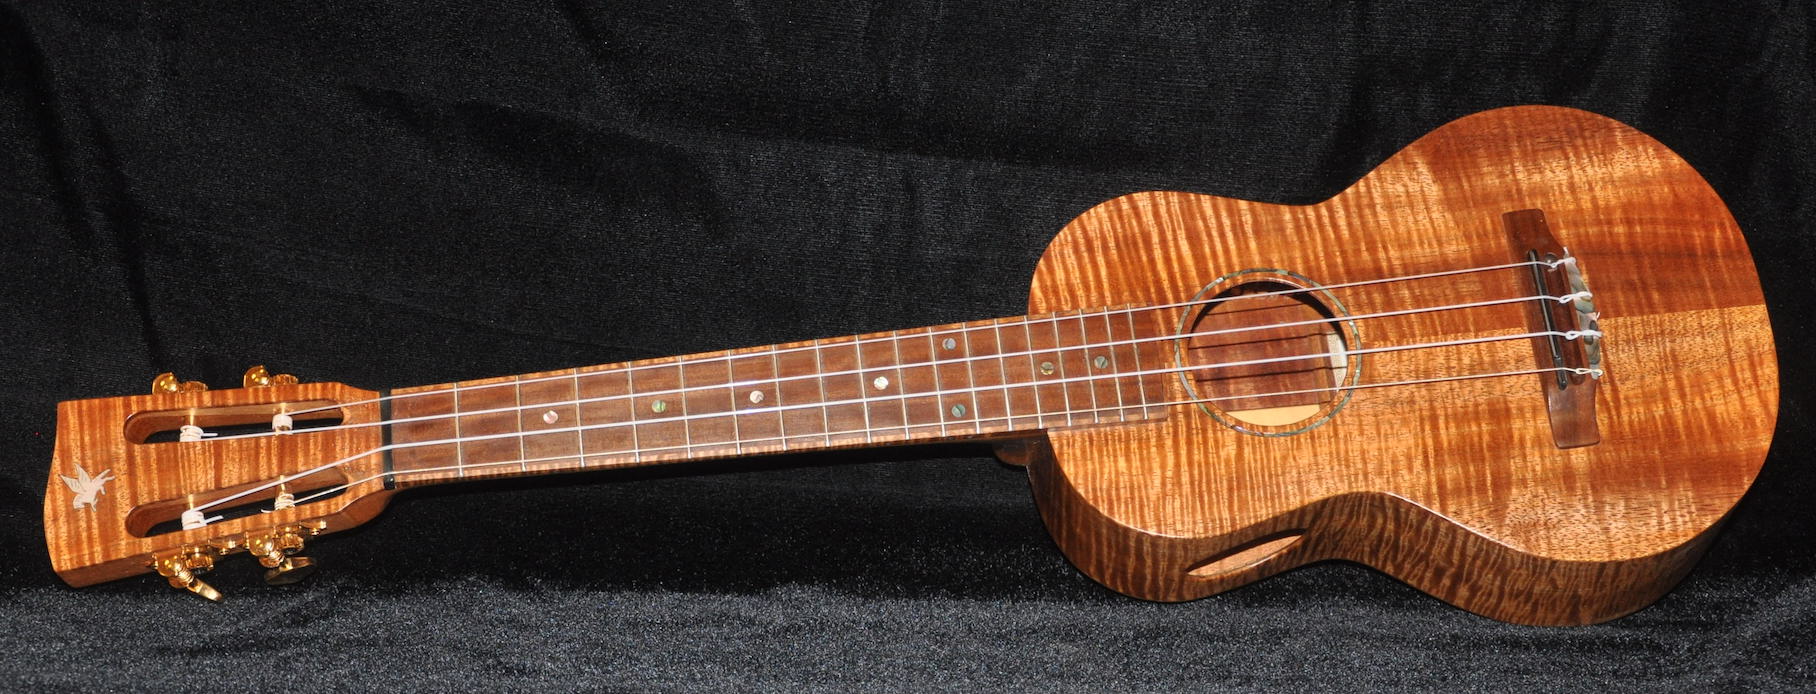 Pegasus Guitars & Ukuleles. A site for enthusiasts of handmade 